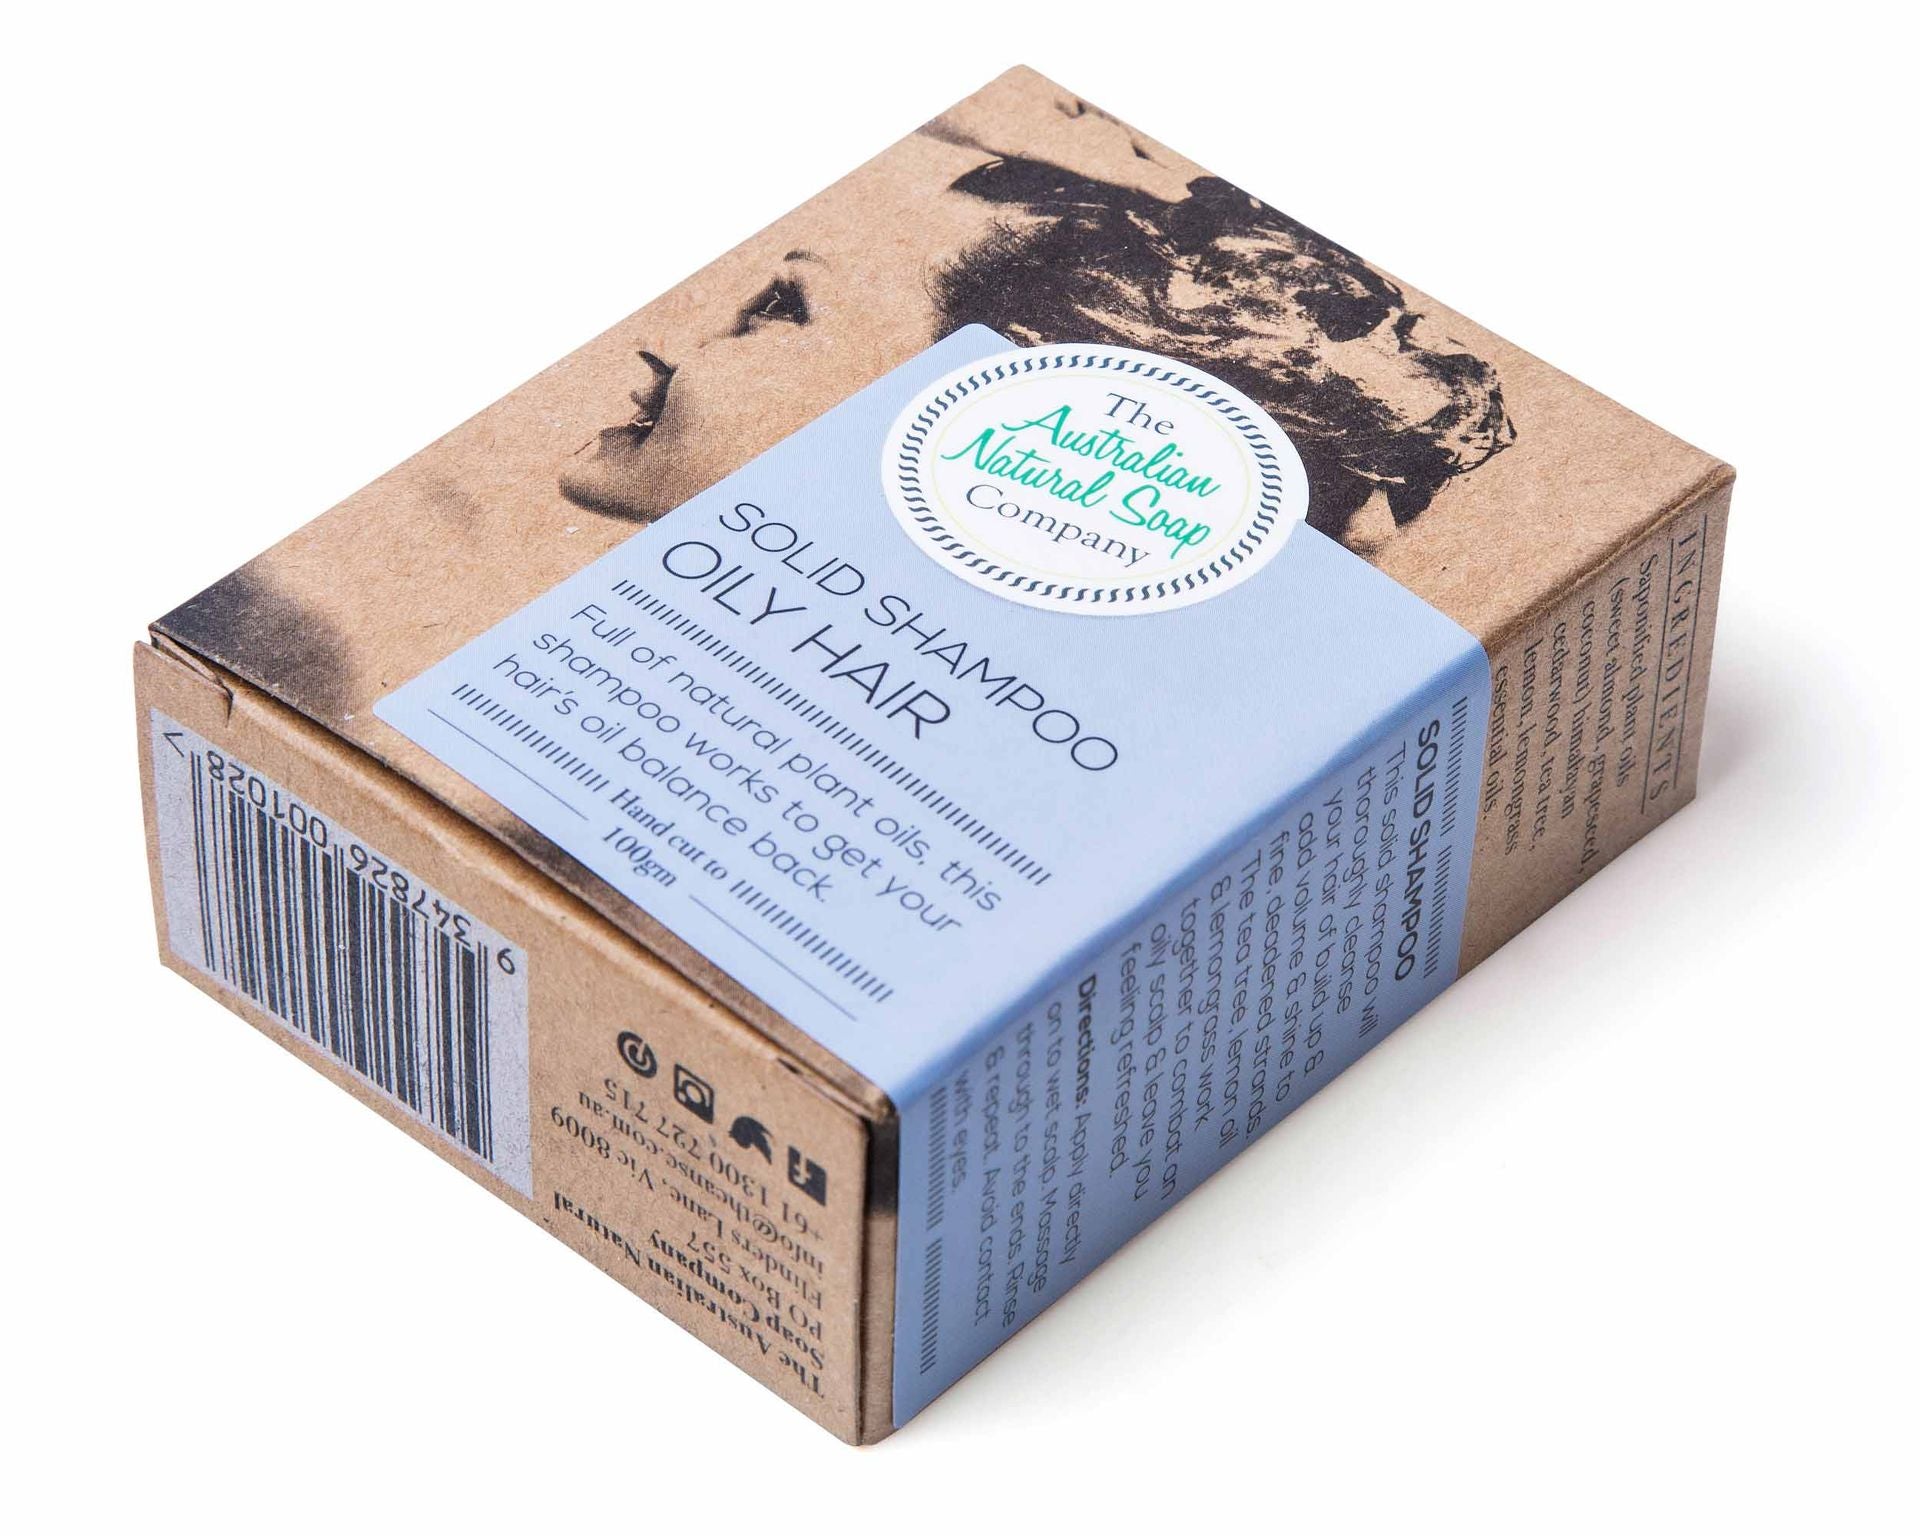 Australian Natural Soap Company shampoo bar for oily hair front of box on angle